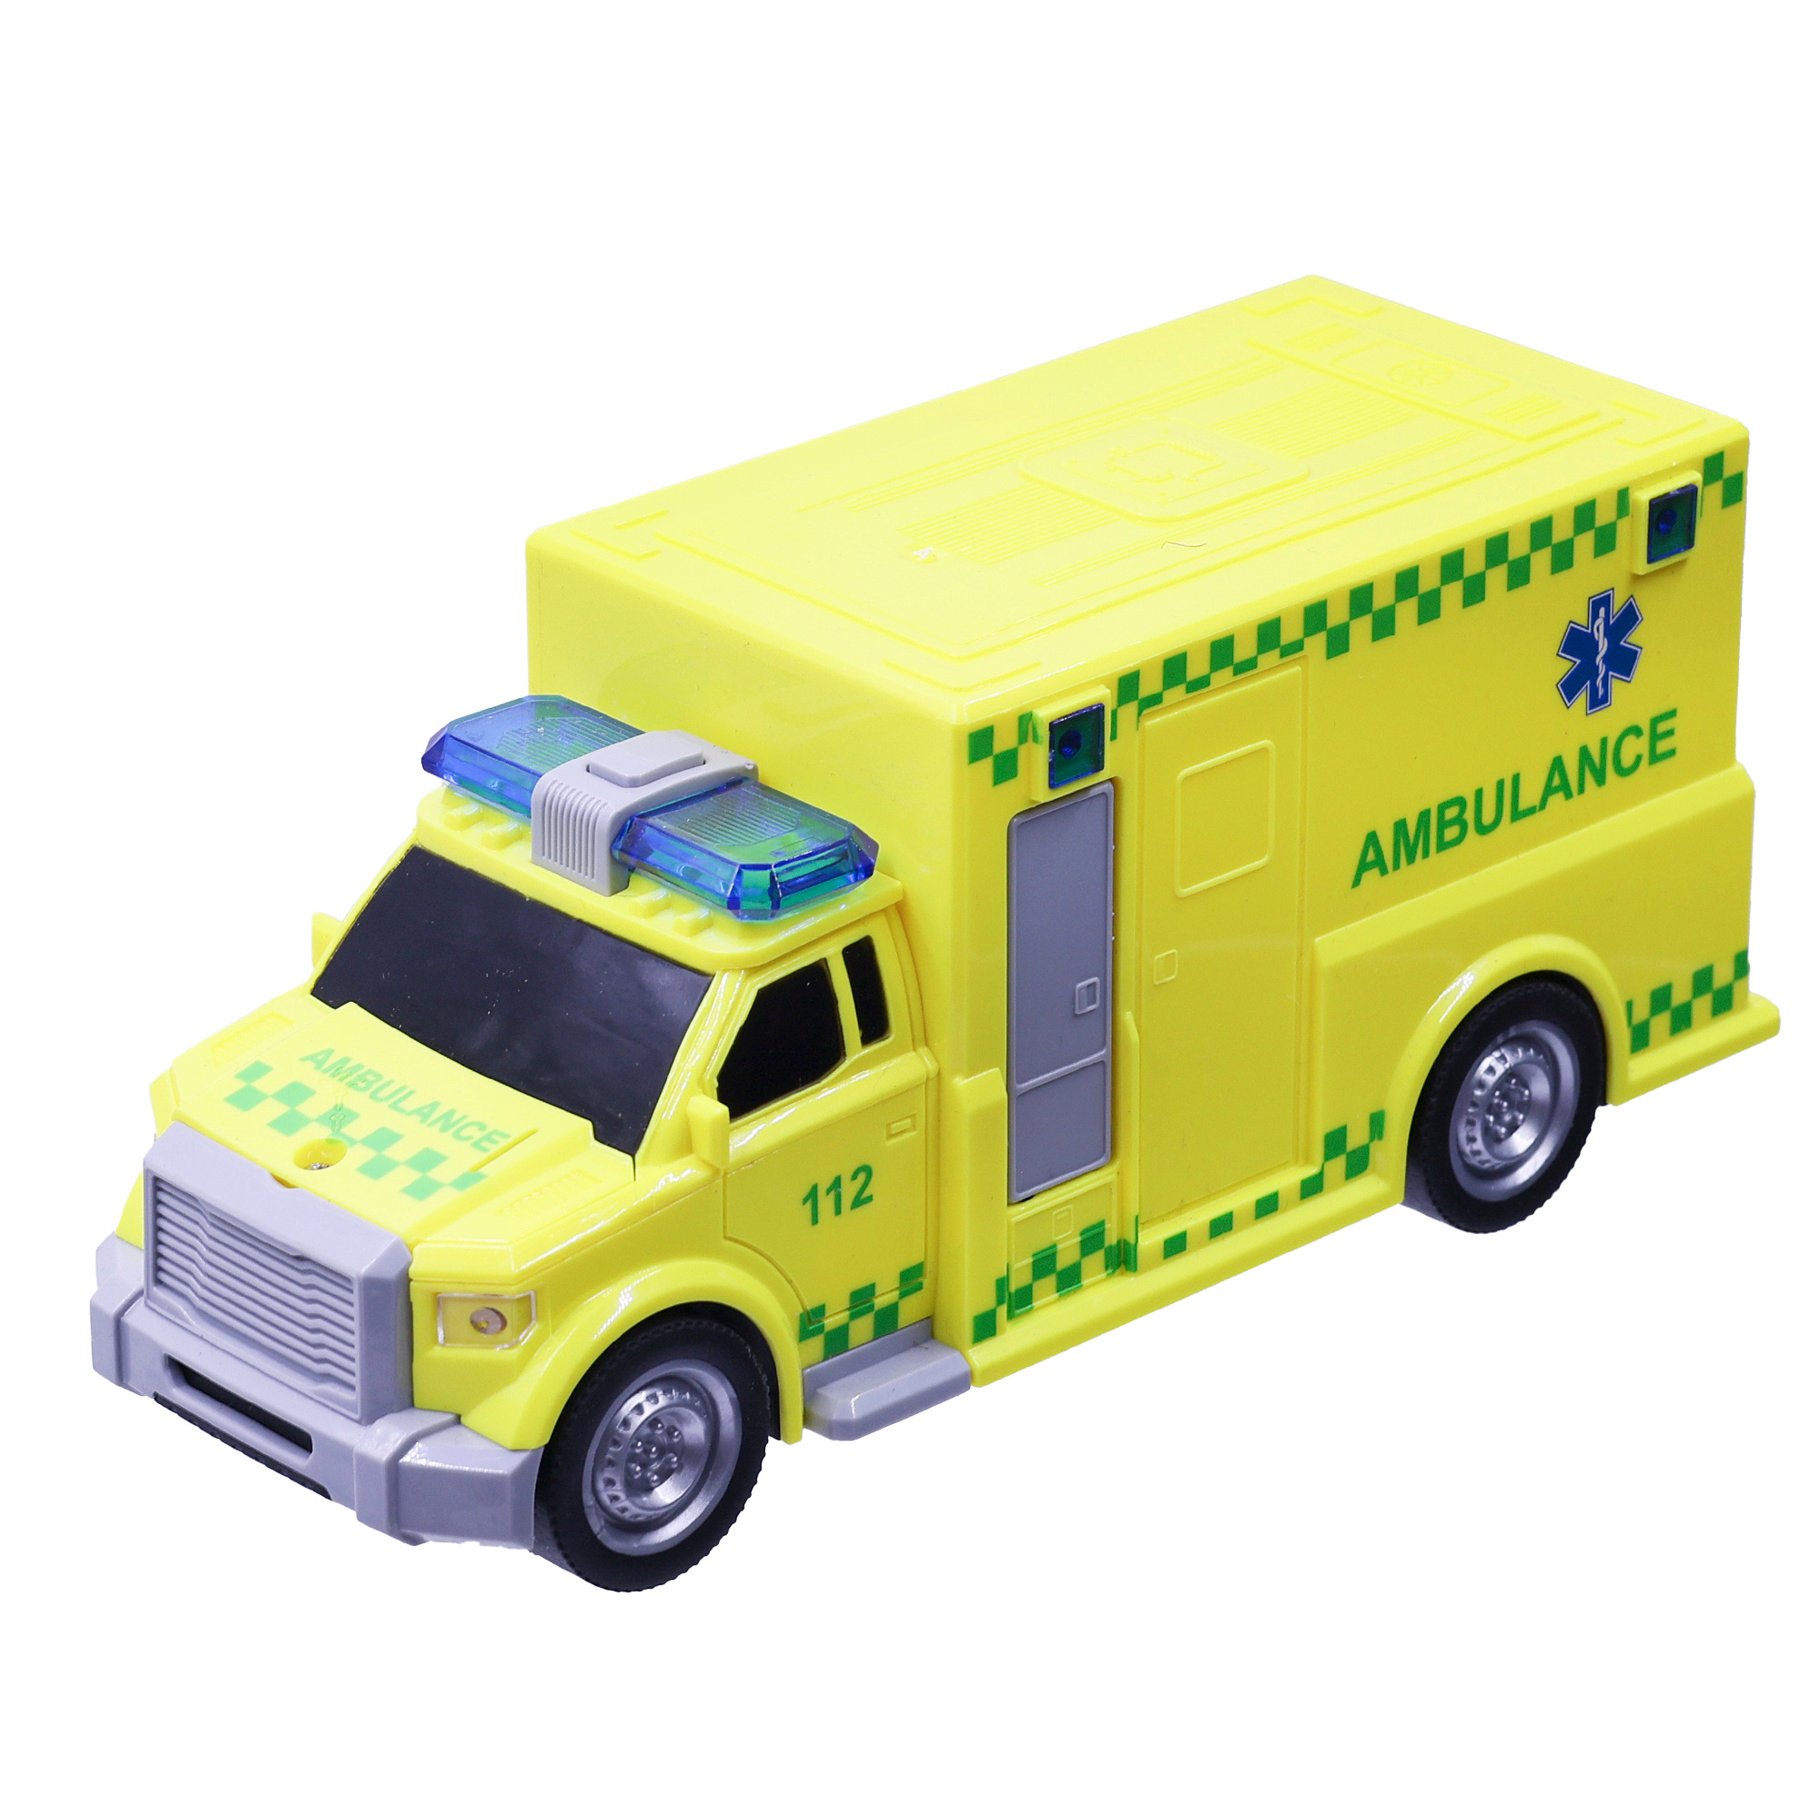 Motor 112 - Ambulance w. light&sound (I-1600013)